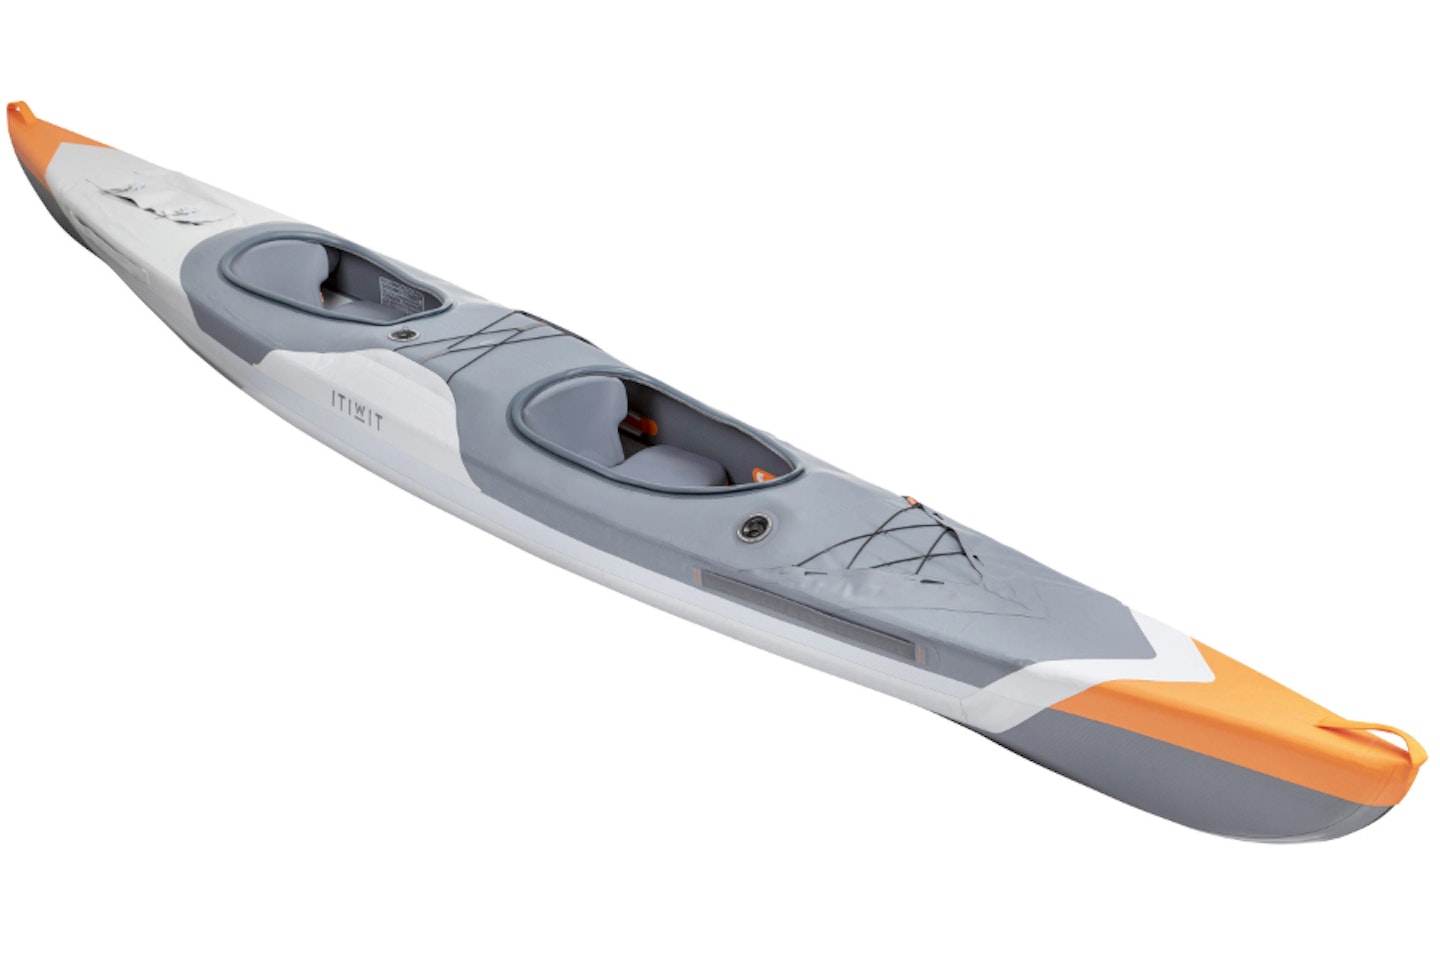 ITIWIT 2-Person Touring Inflatable Dropstitch Kayak